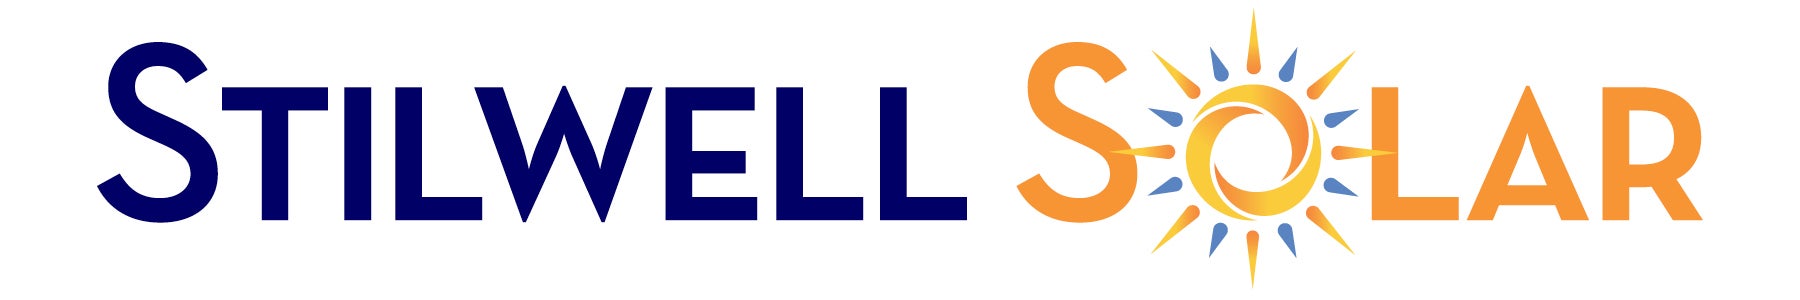 Stilwell Solar logo